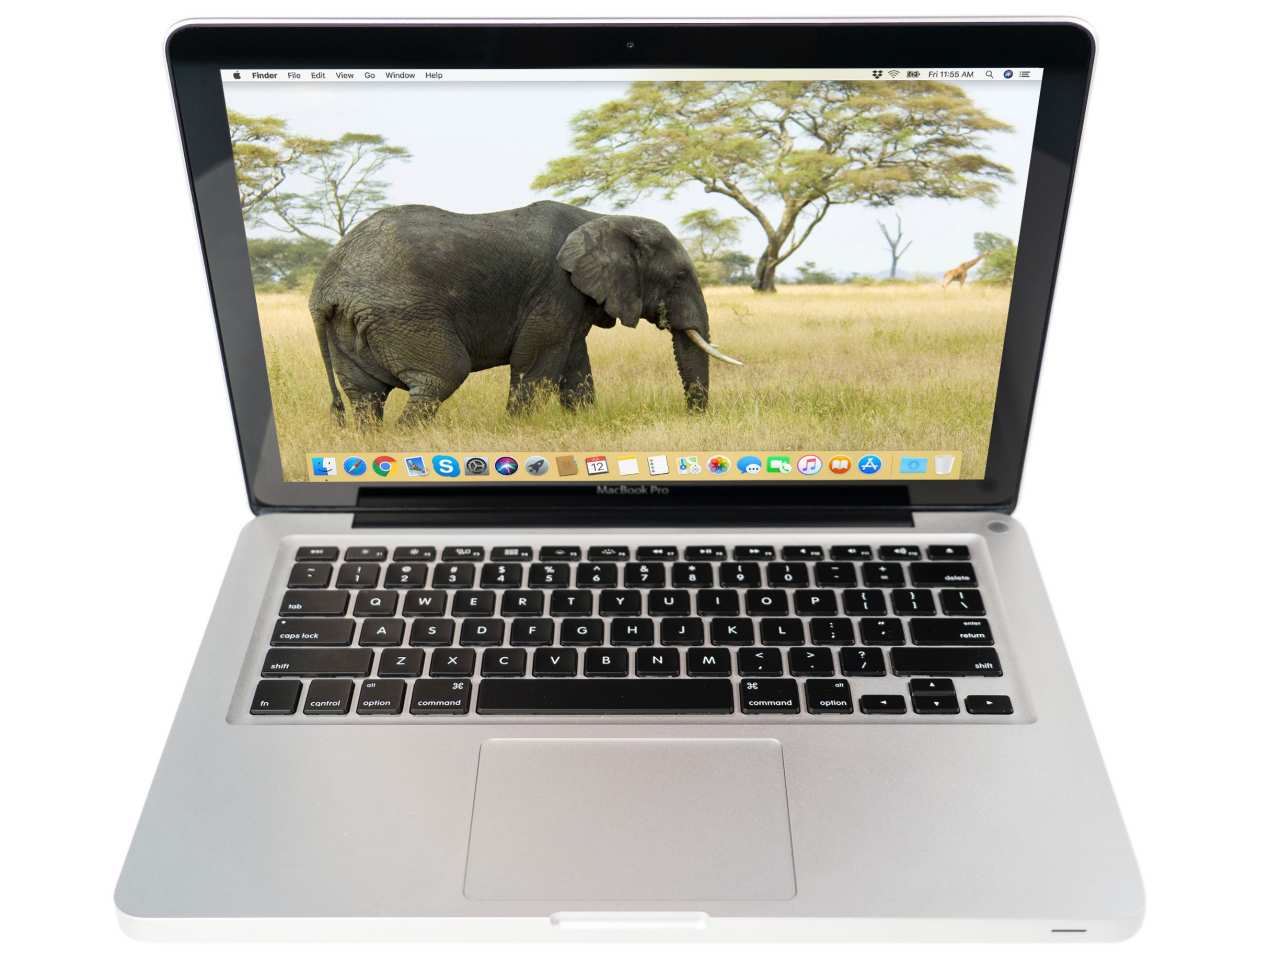 Apple MacBook Pro (13-inch Early 2011) 2.7 GHz i7-2620M 4GB 500GB HDD (Silver)